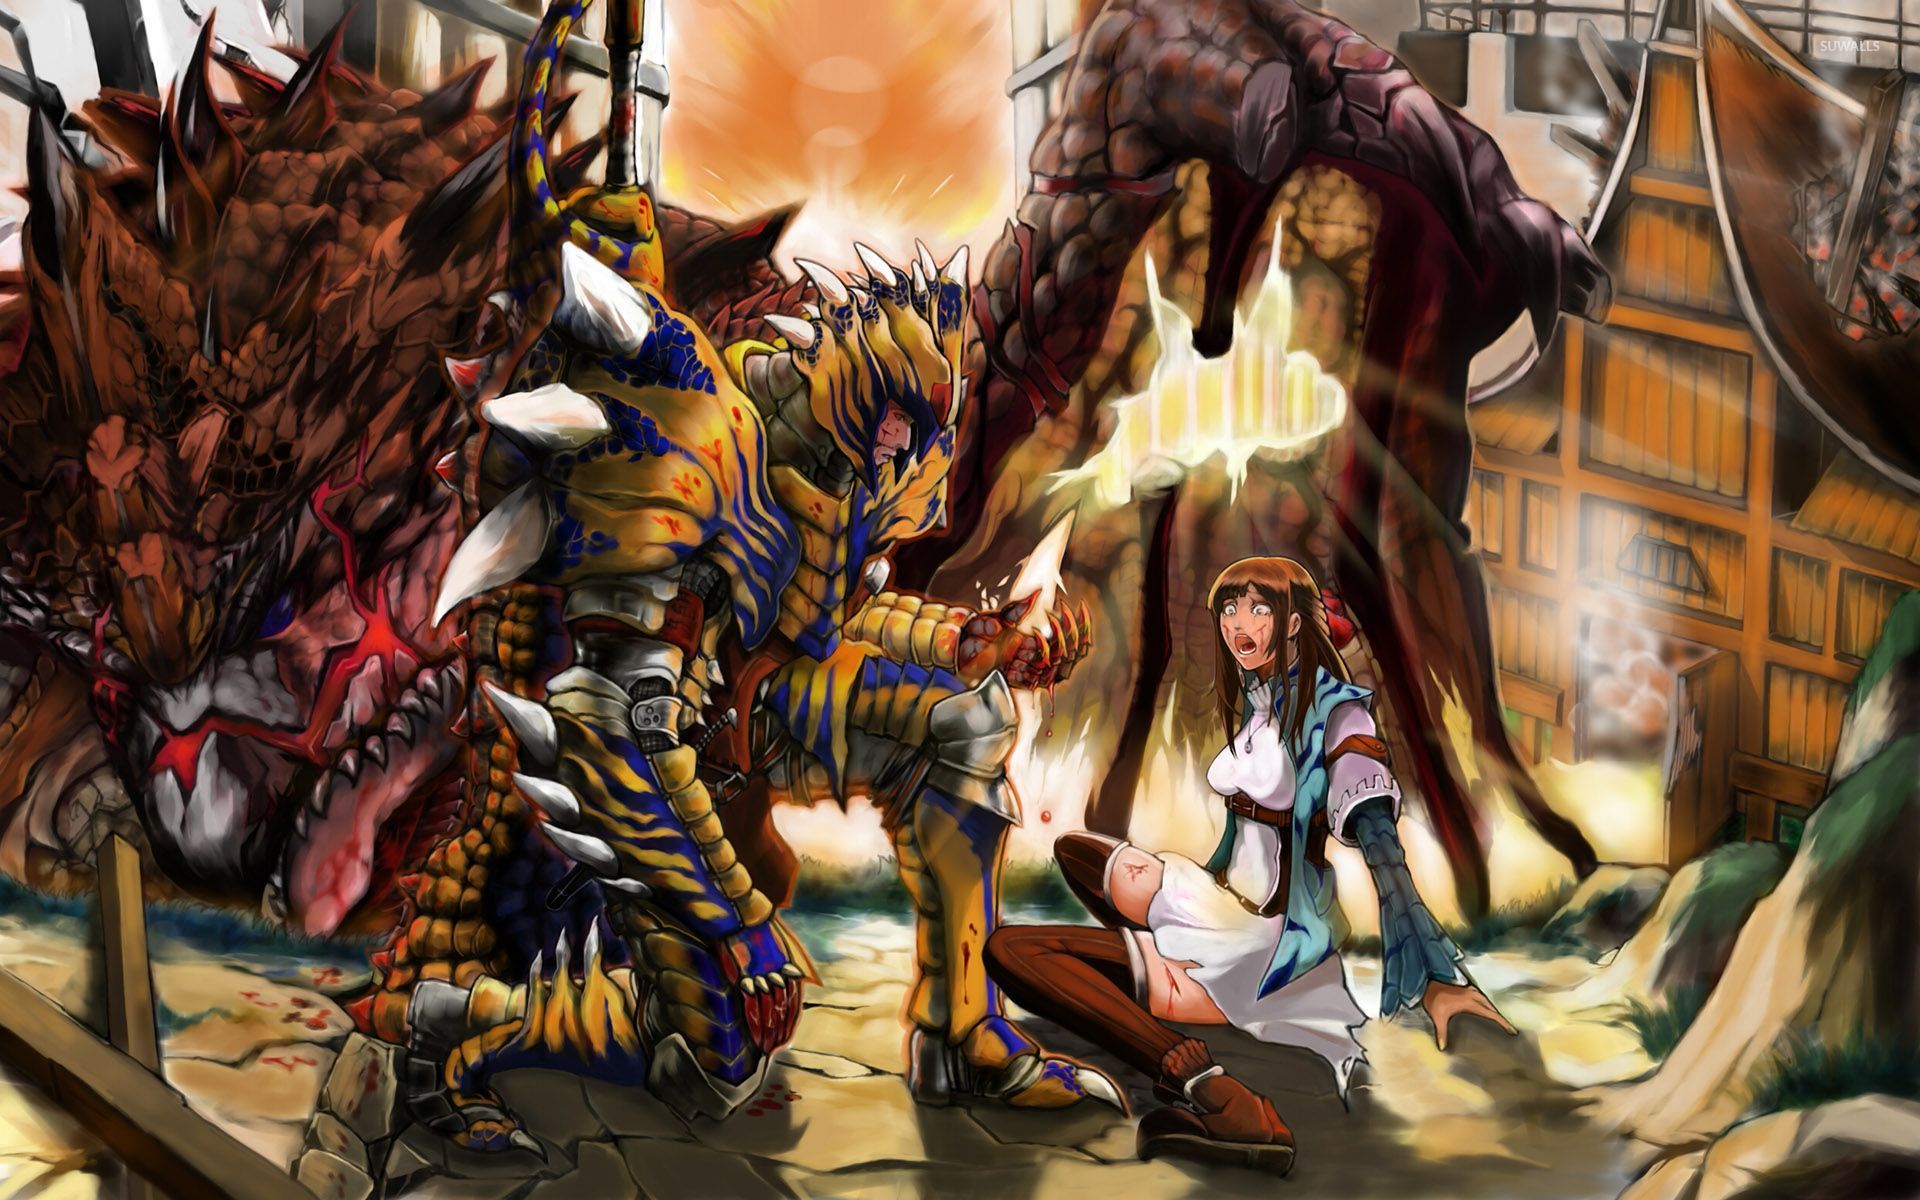 monster anime wallpaper,action adventure spiel,cg kunstwerk,computerspiel,fiktion,mythologie